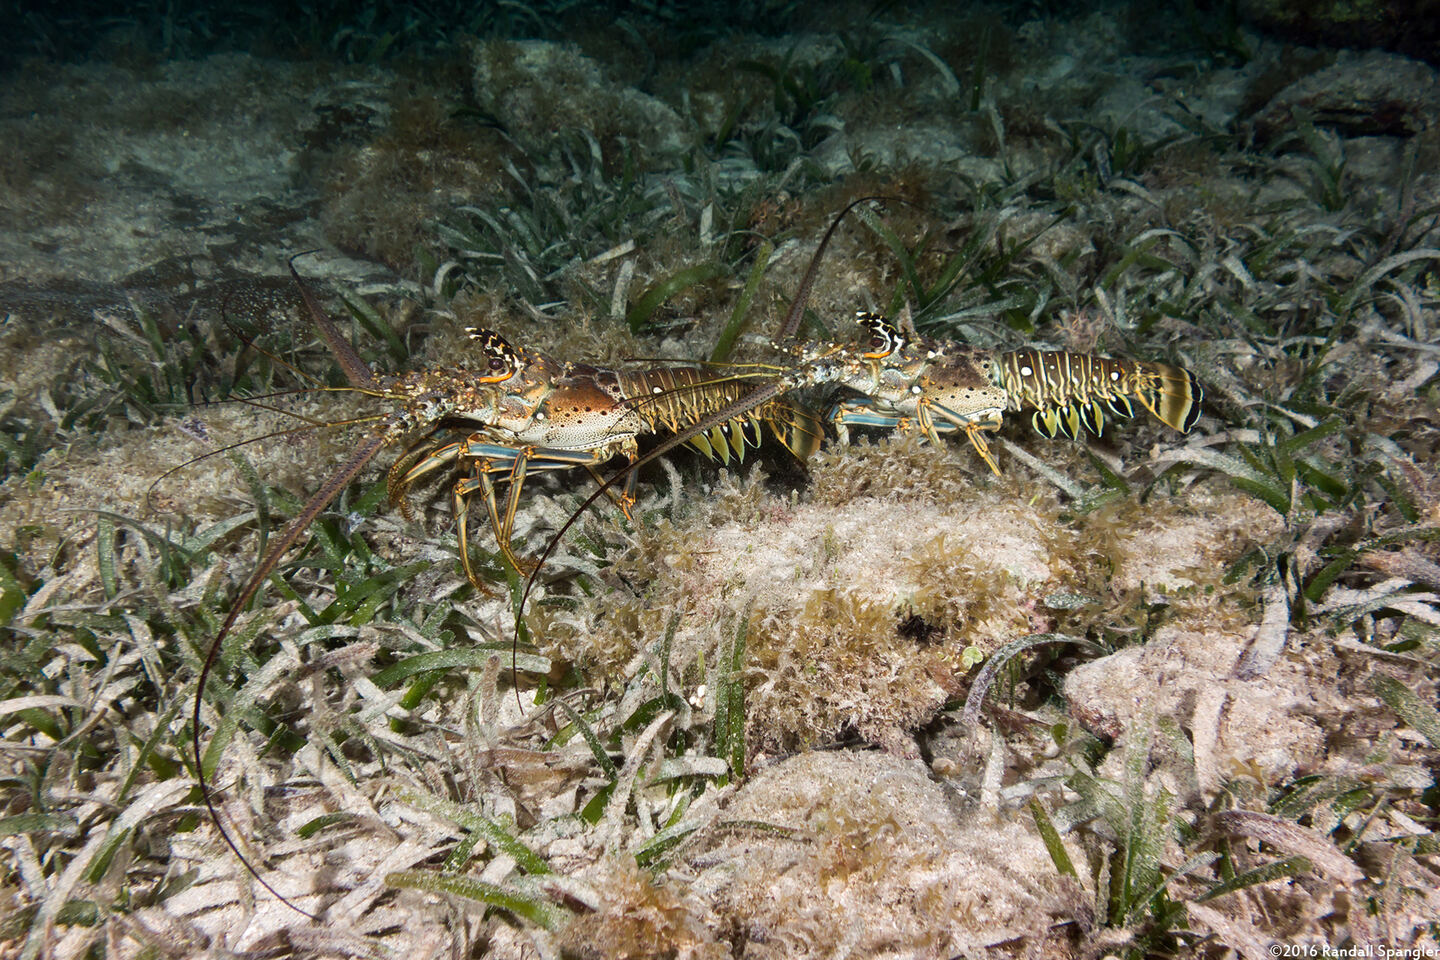 Panulirus argus (Caribbean Spiny Lobster)